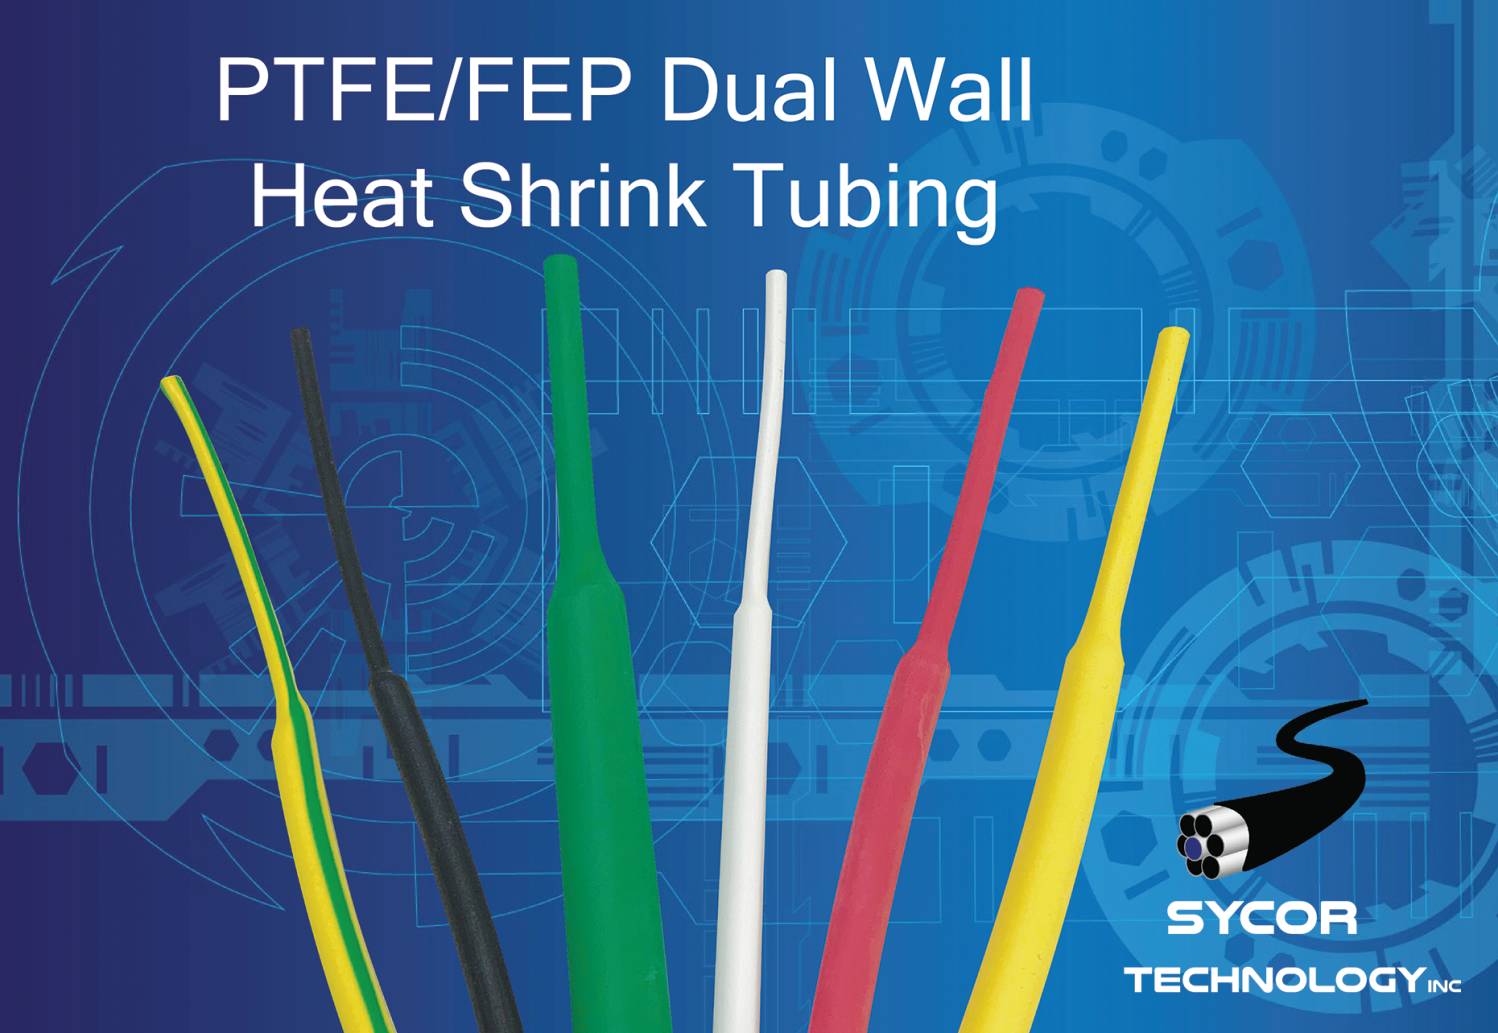 PTFE/FEP Dual Wall Heat Shrink Tubing